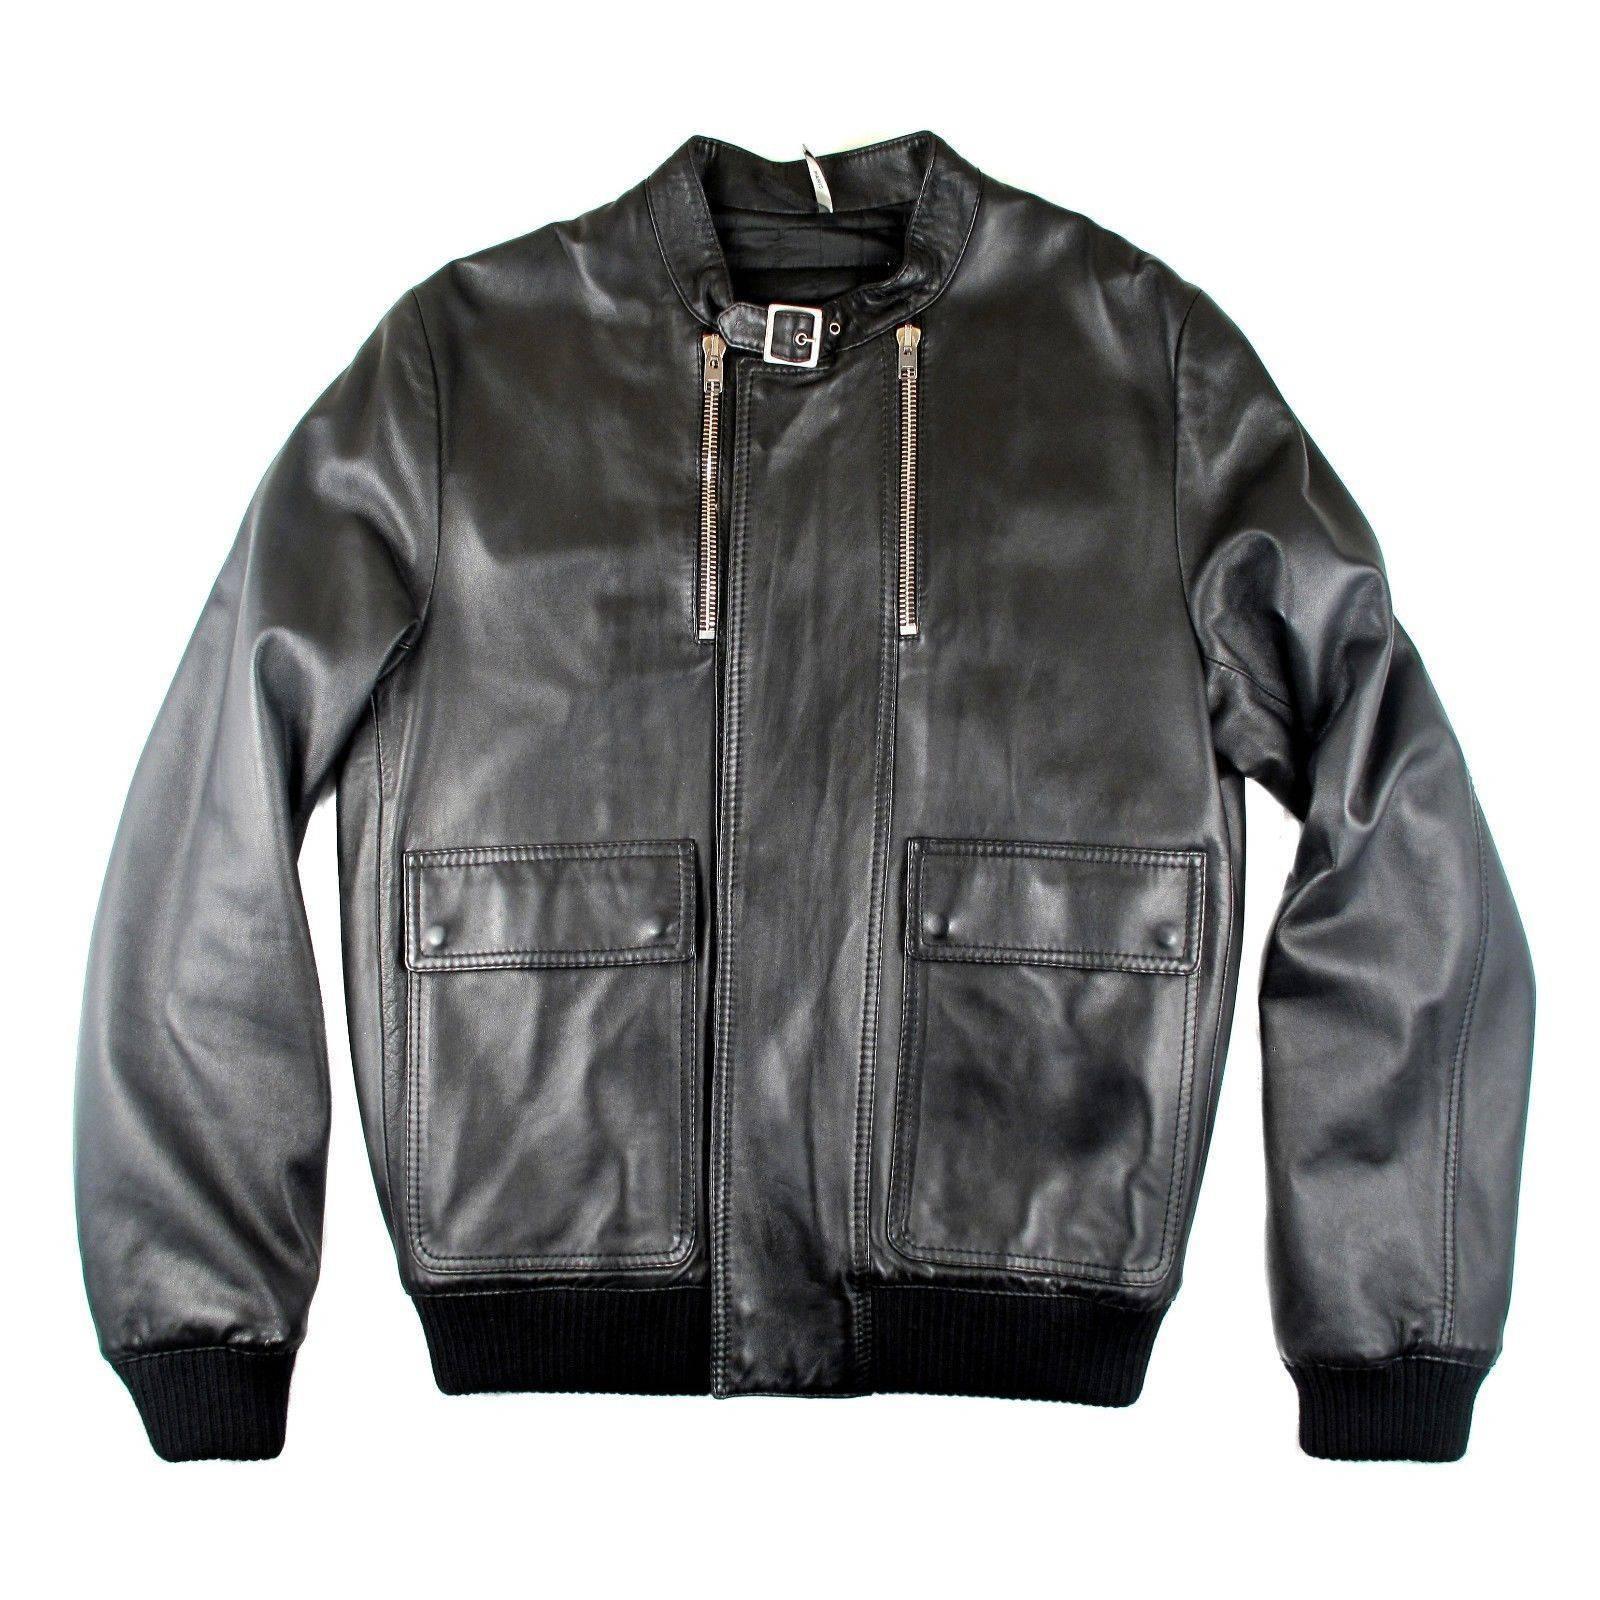 Dior Homme Leather Jacket Large - 52 - Black Zipper Silver Coat Bomber ...